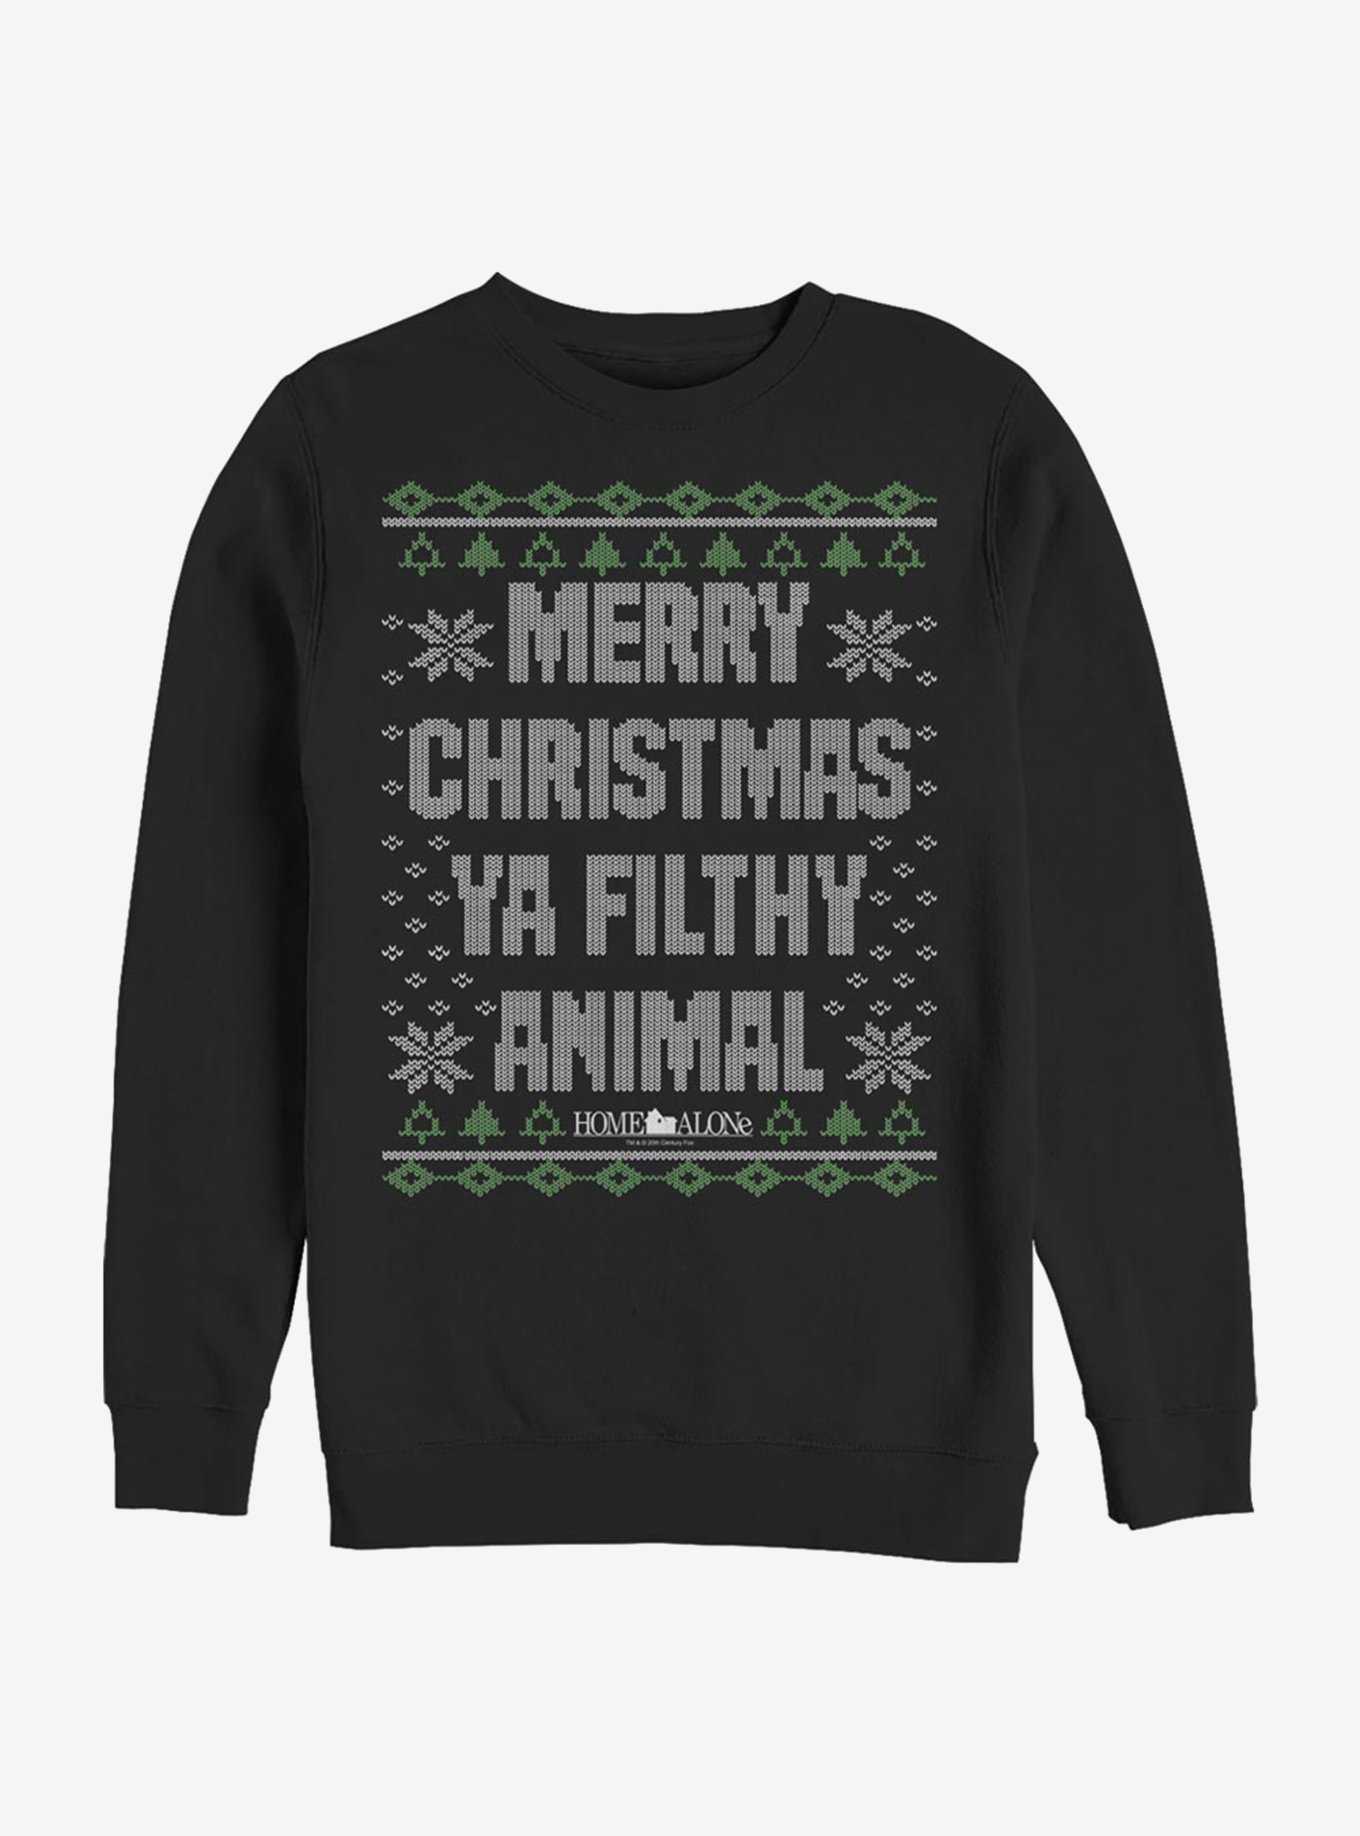 Home Alone Merry Christmas Ya Filthy Animal Ugly Holiday Crew Sweatshirt, , hi-res